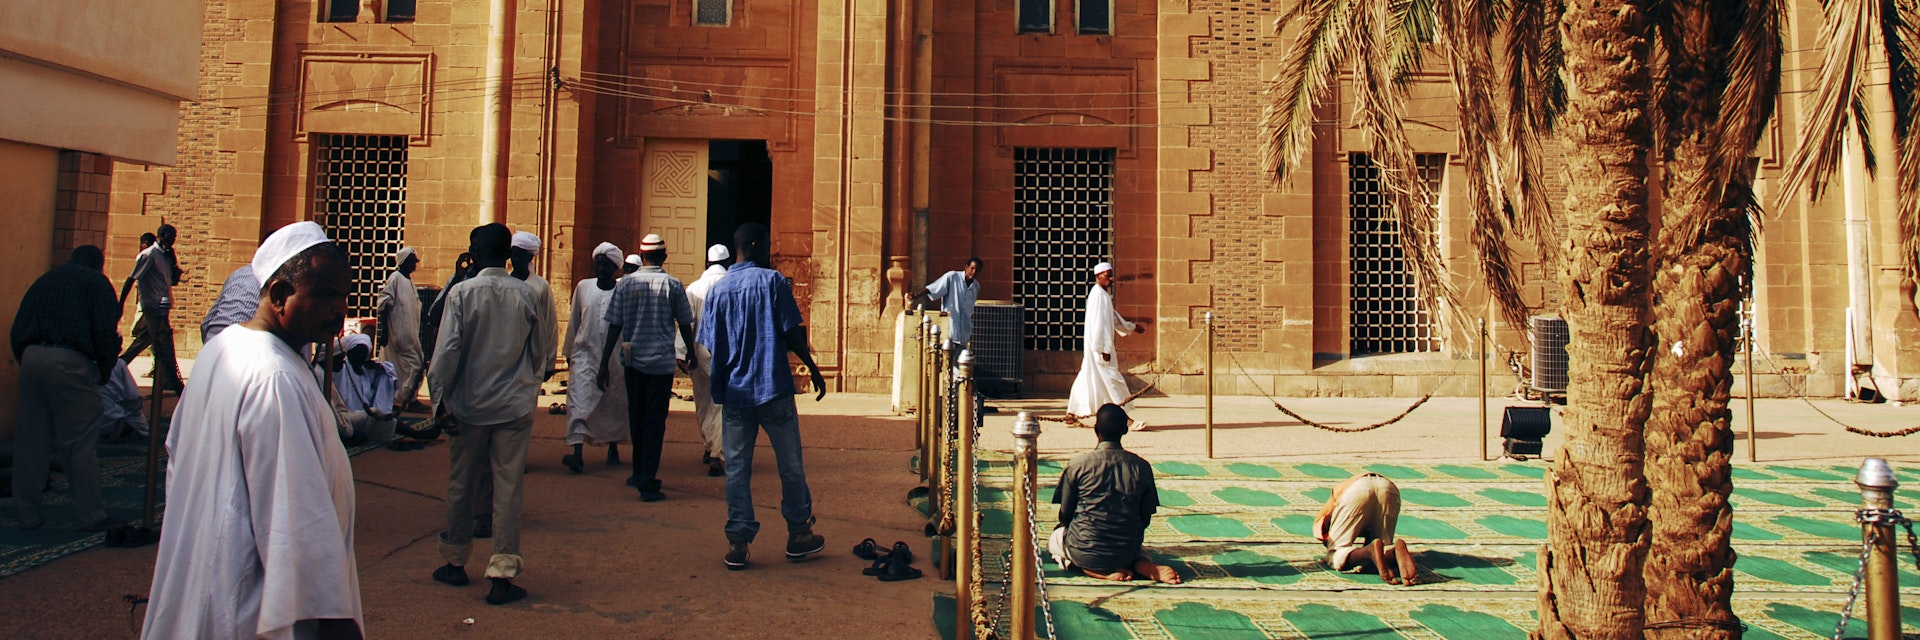 Great Mosque, Khartoum, Sudan